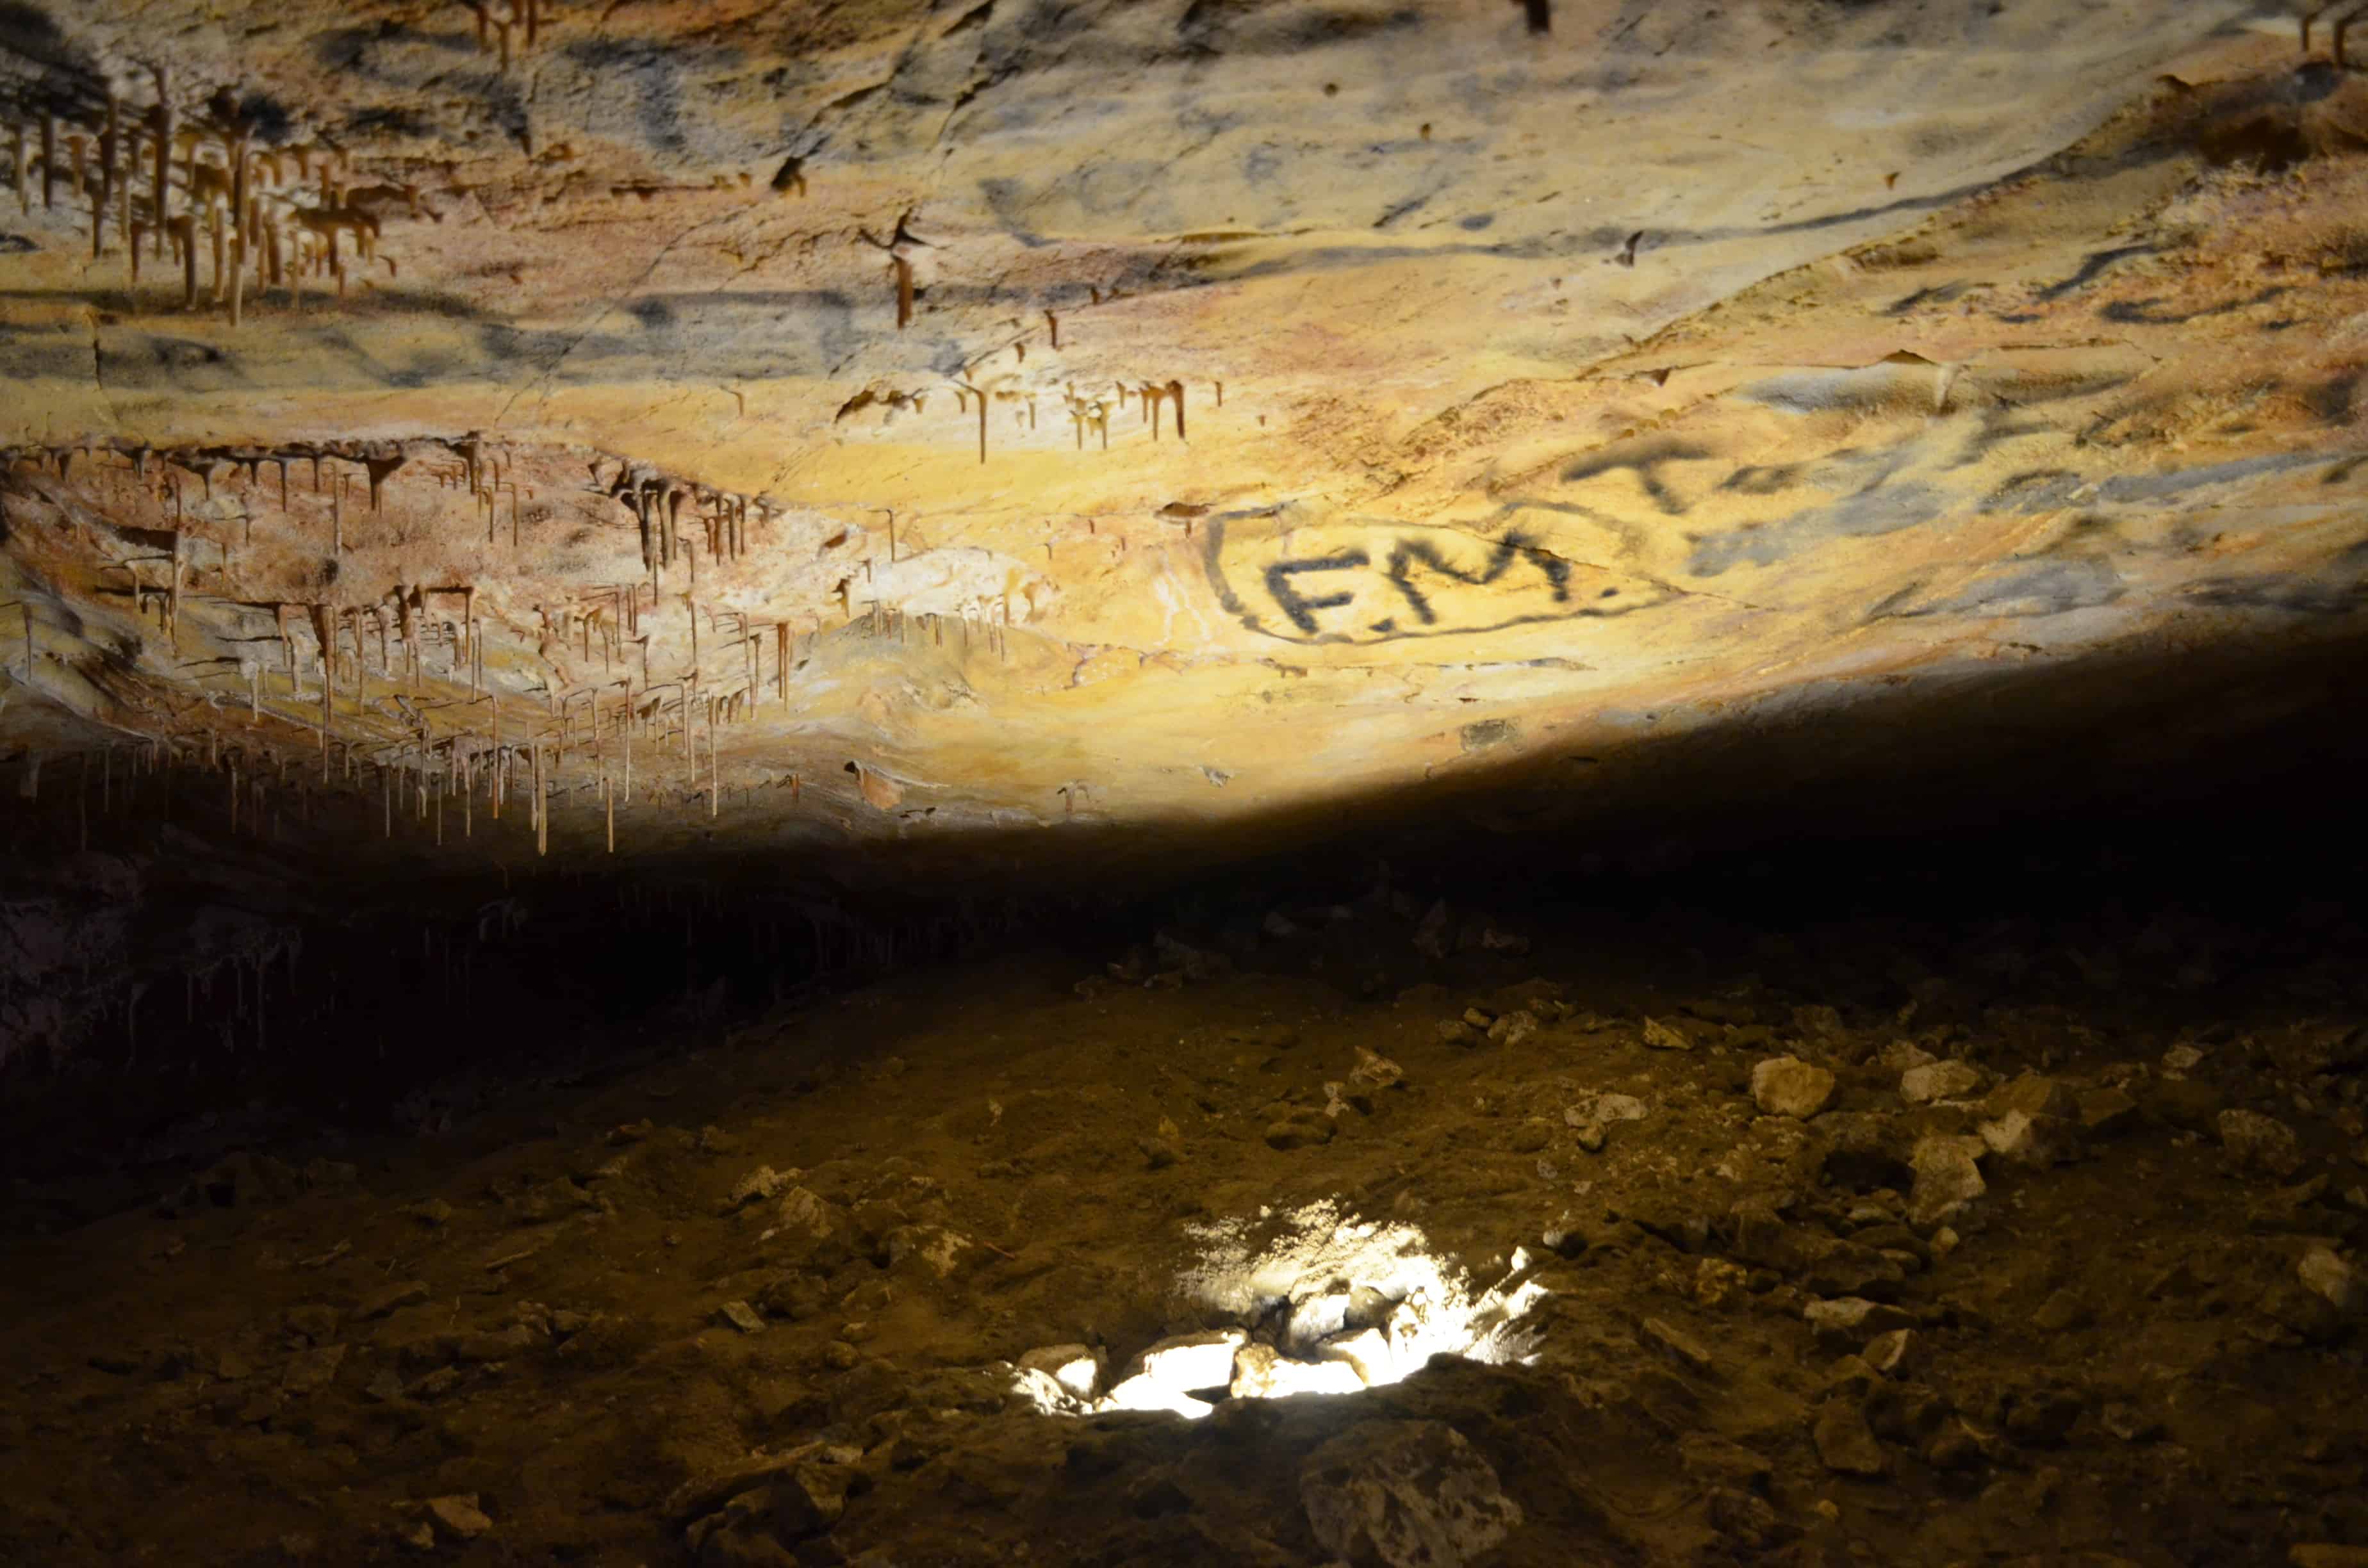 Graffiti in the Inscription Room at Lehman Caves, Great Basin National Park, Nevada